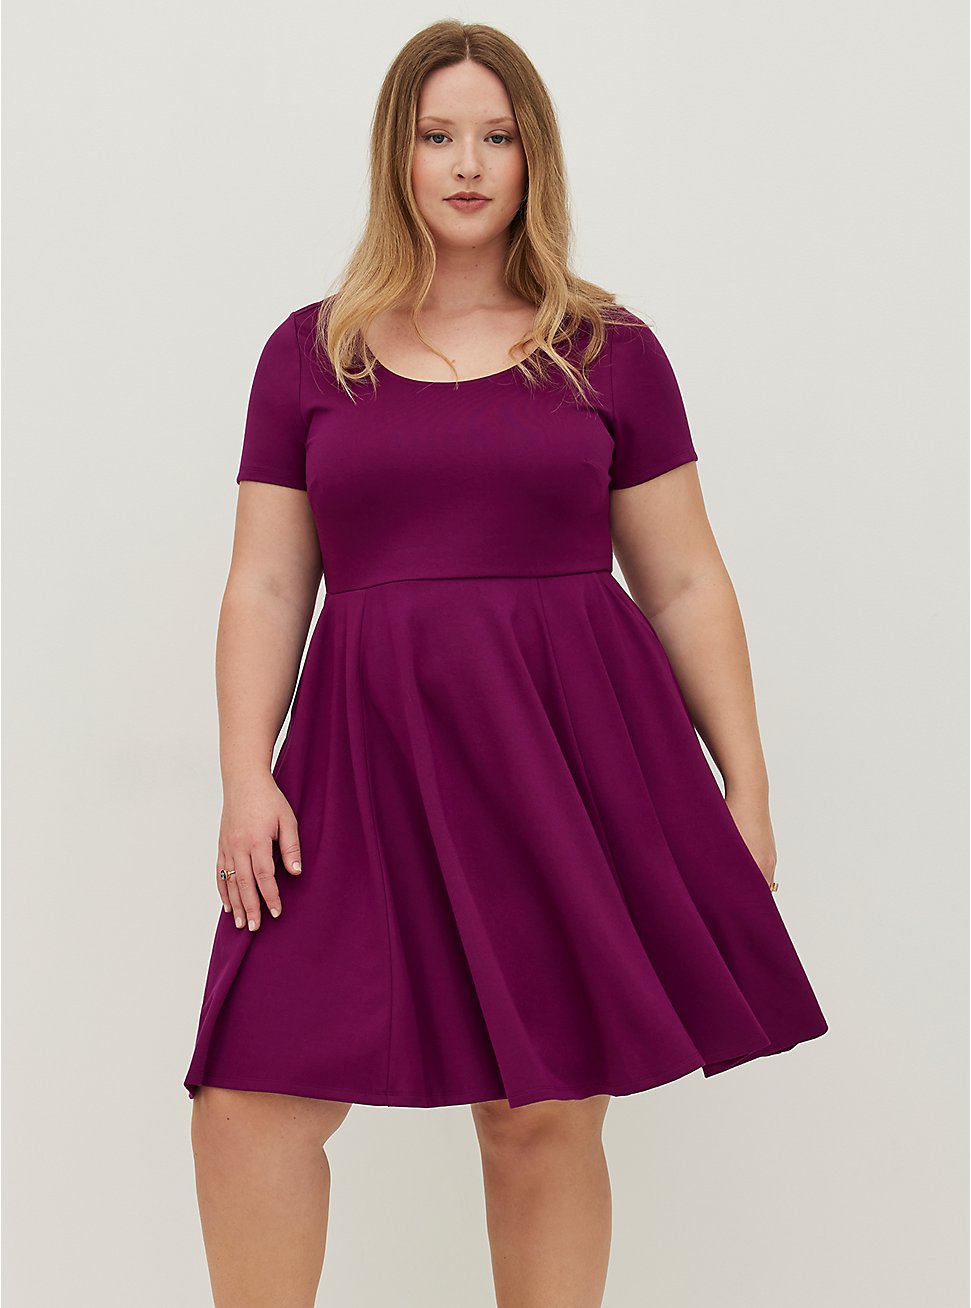 Plus Size Scoop Neck Mini Dress - Ponte Purple, PURPLE, hi-res